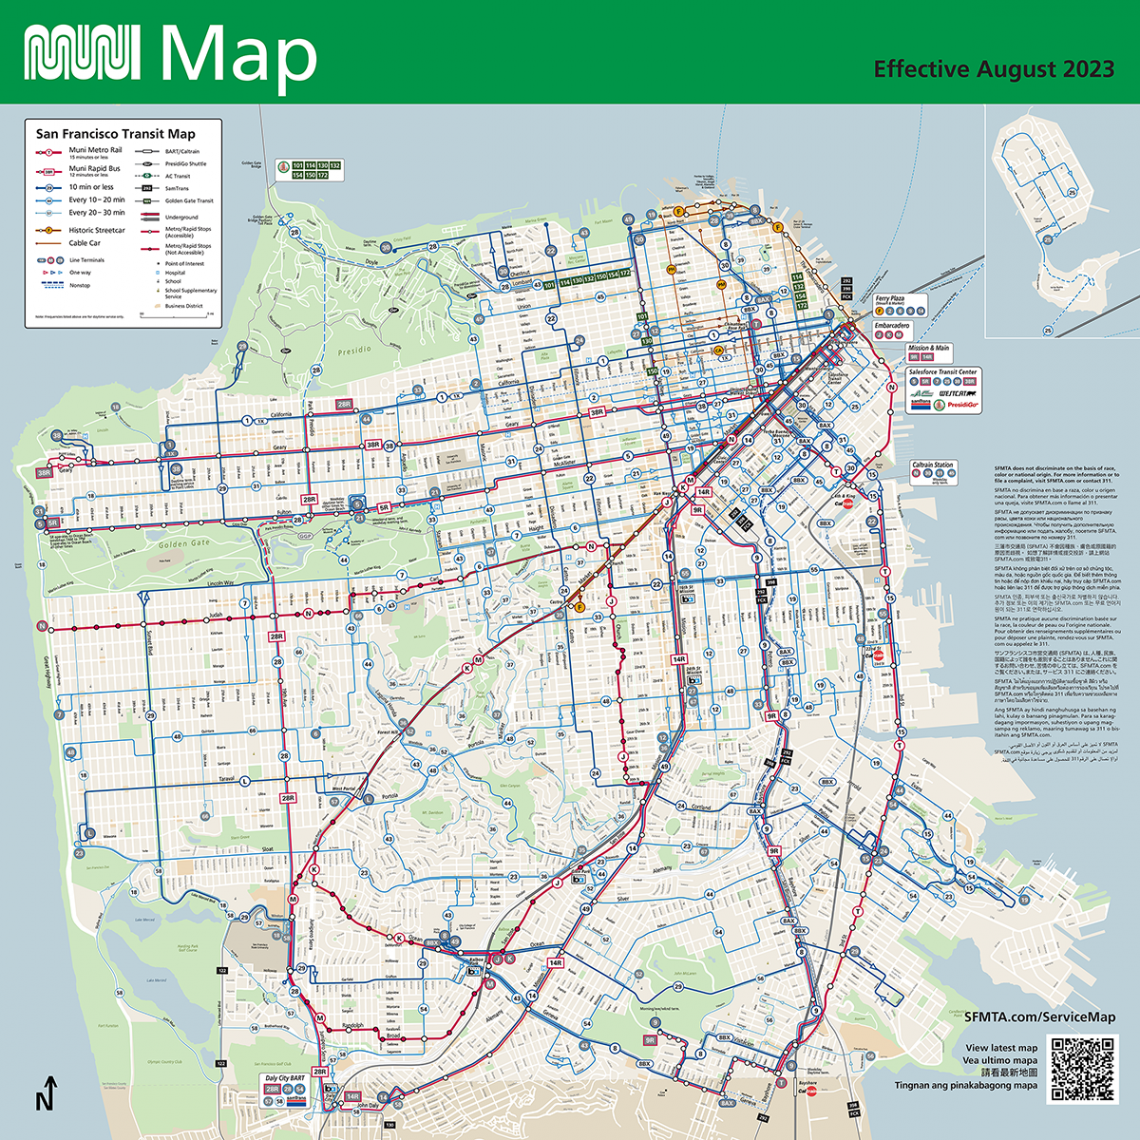 Muni service map effective August 2023